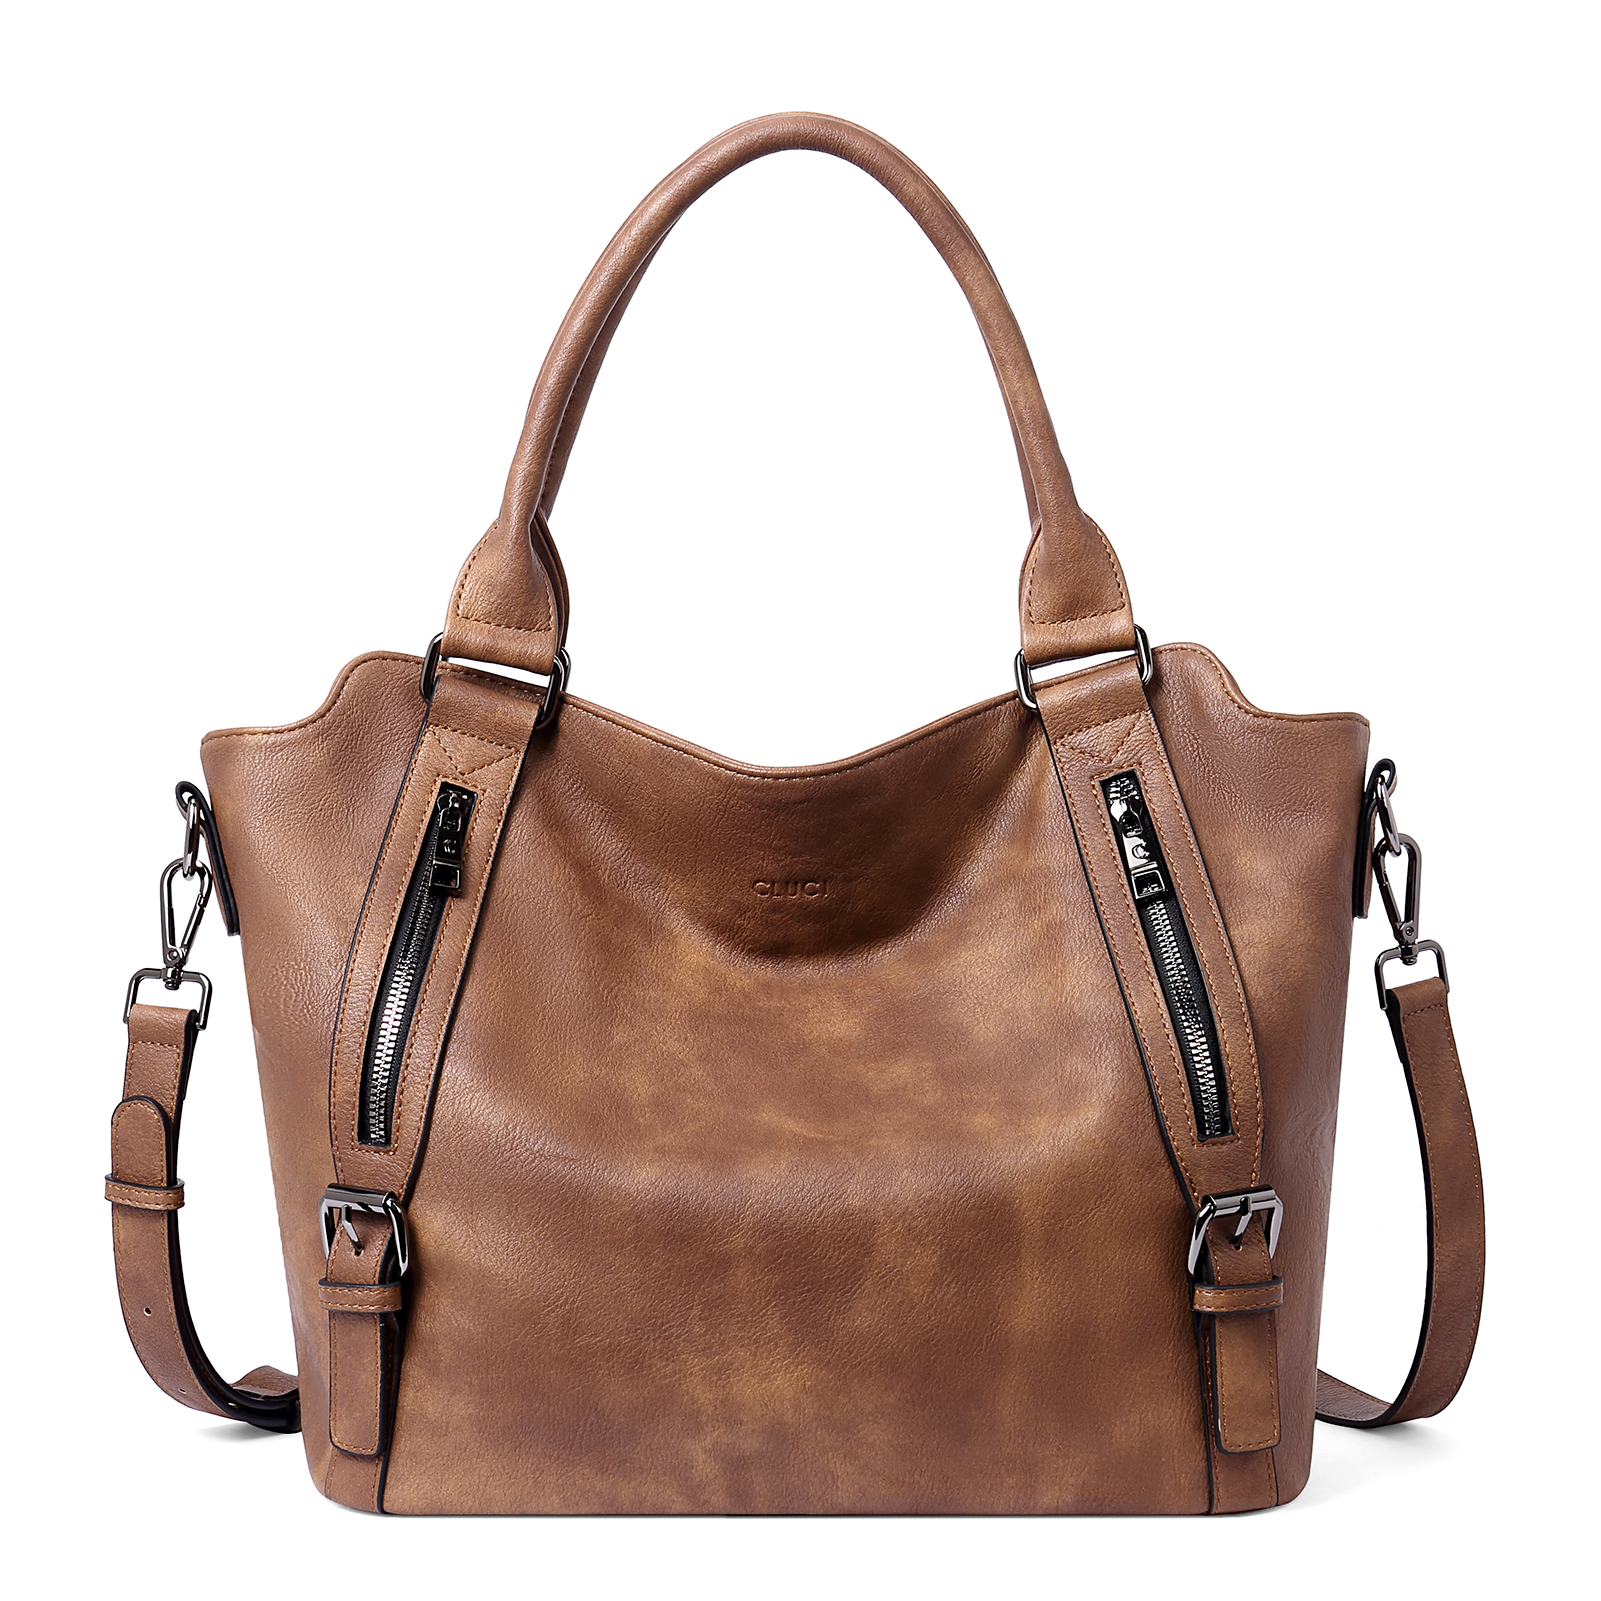 Angel Barcelo Roomy Fashion Handbags Ladies Purse Satchel Shoulder Bags Tote  Washed Leather Bag - Women's Handbags - Houston, Texas | Facebook  Marketplace | Facebook